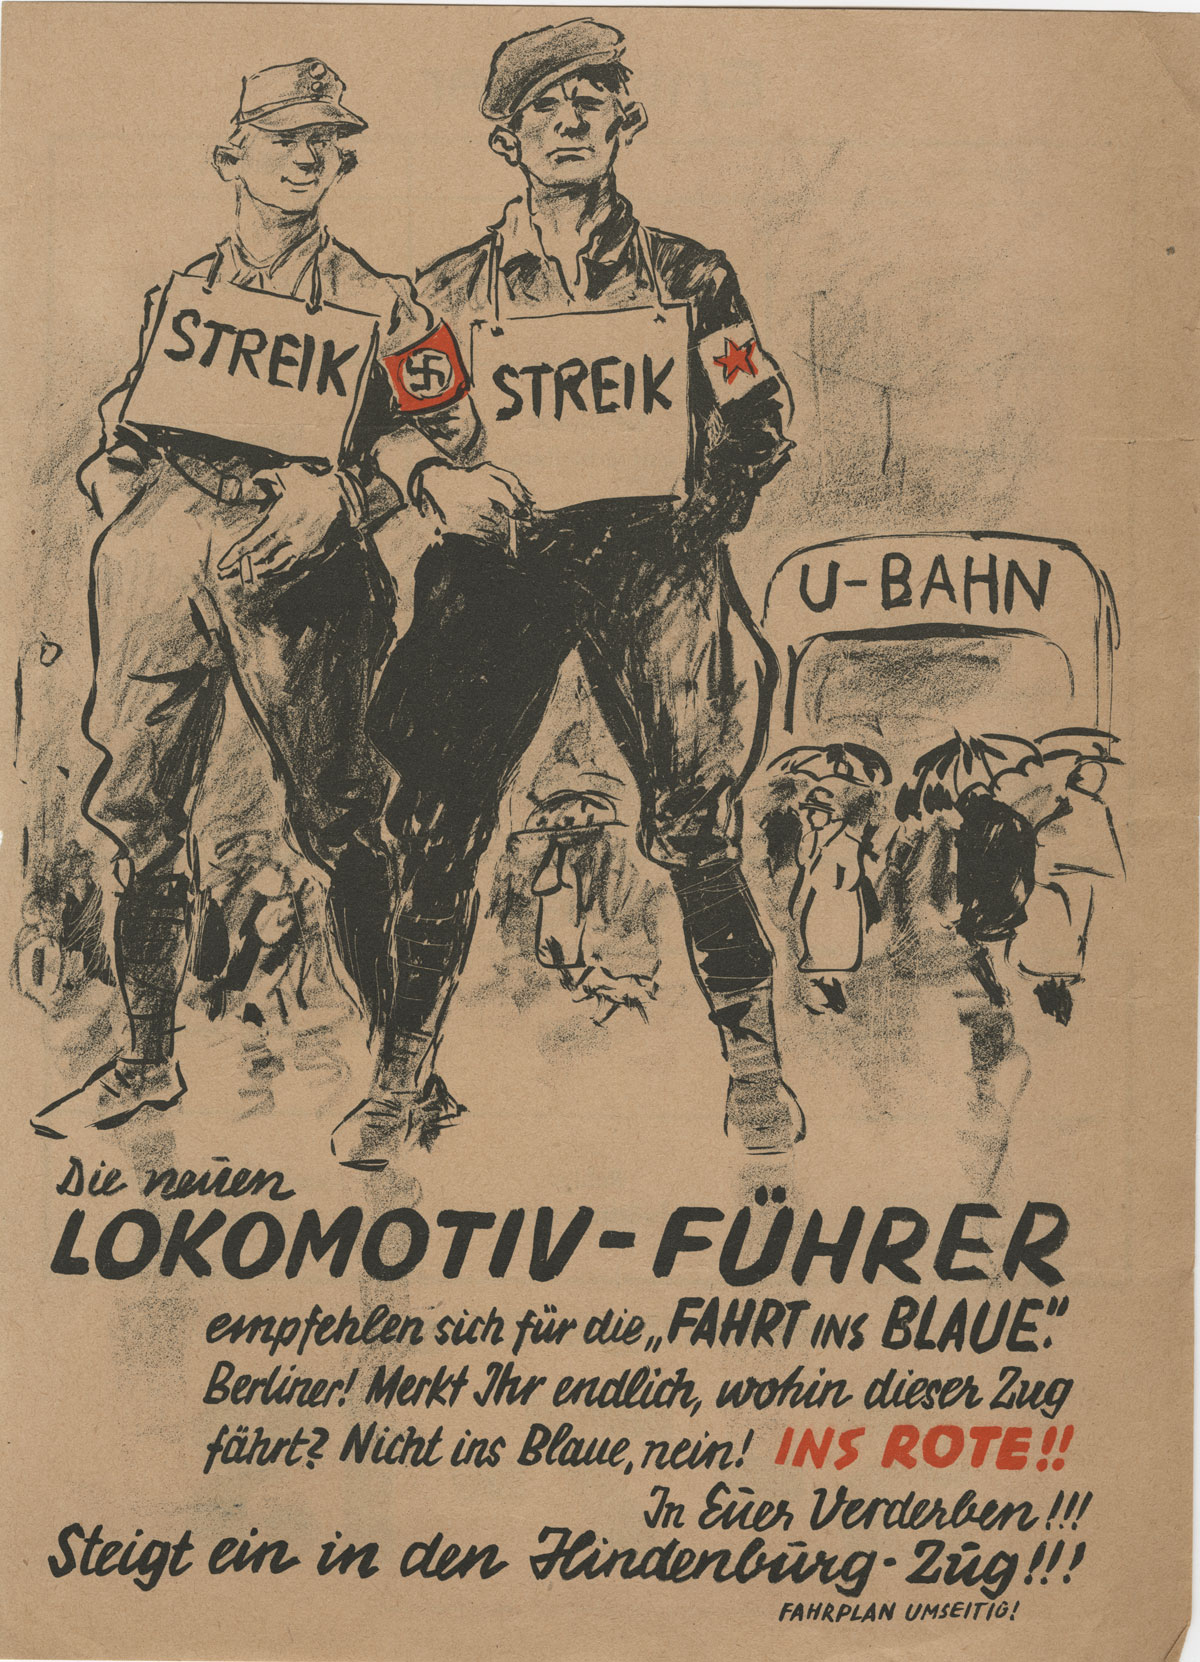 Handbill from 1932 German elections ephemera collection. It reads, "The new locomotive engineer." 28x21 cm.